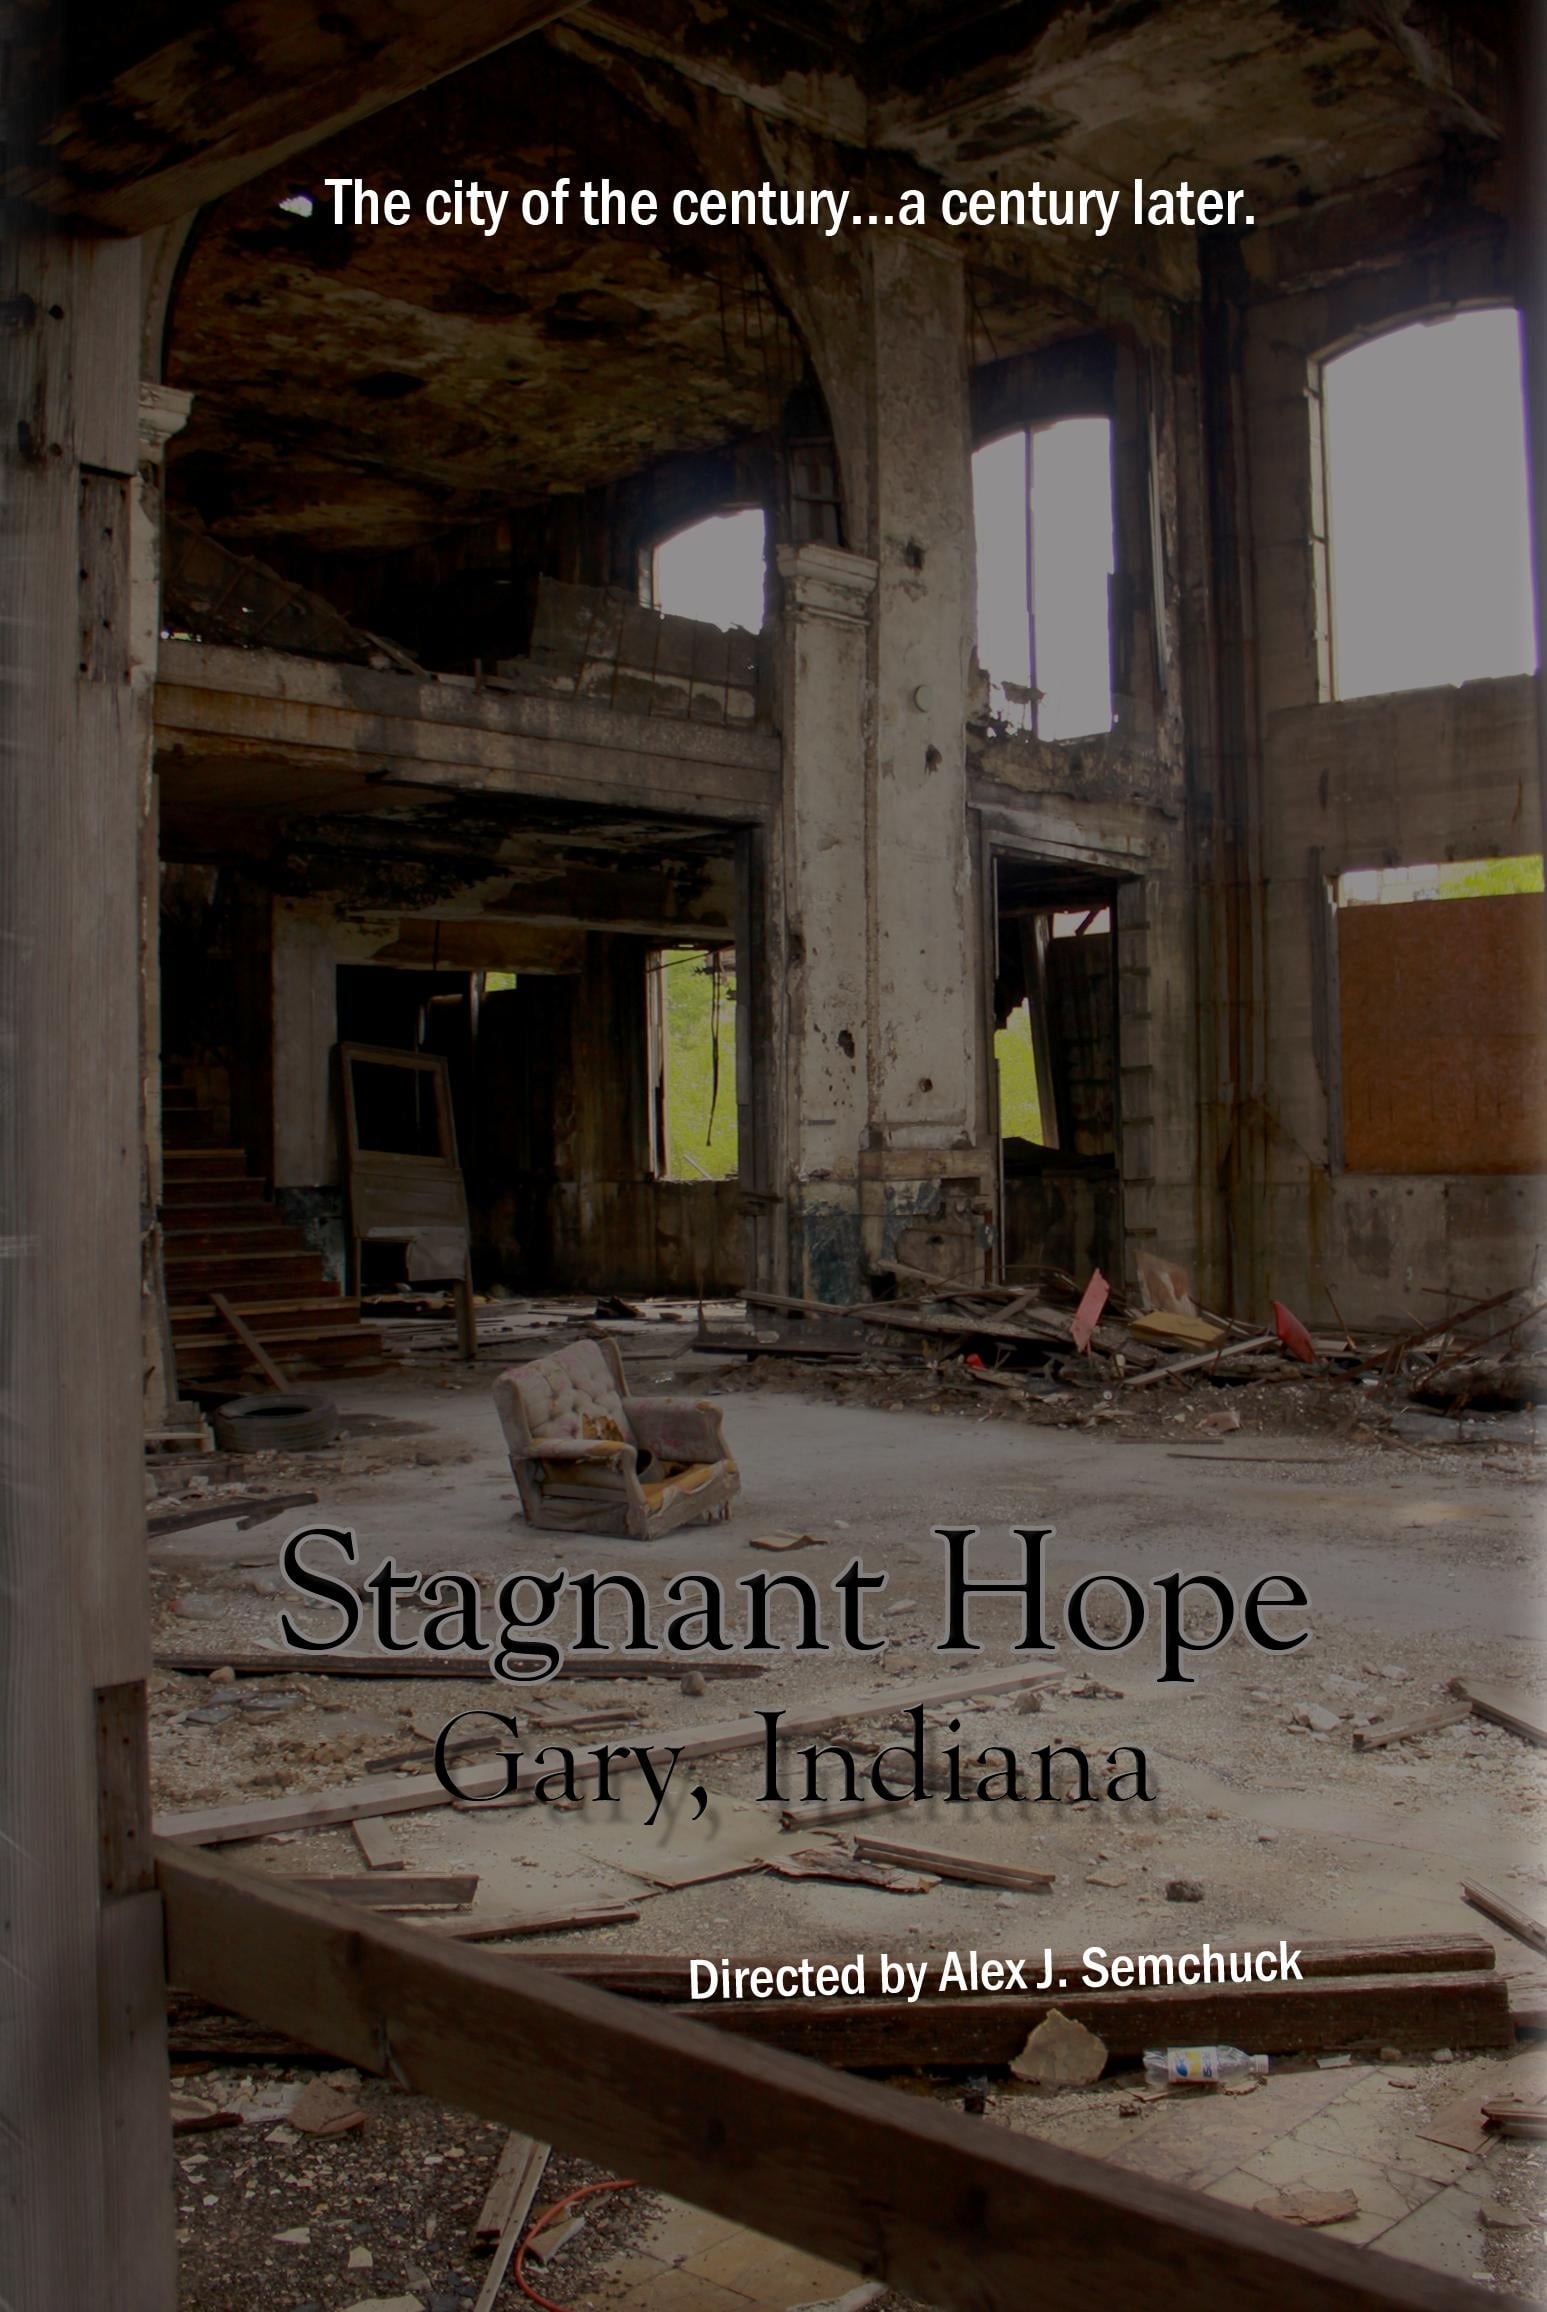 Stagnant Hope: Gary, Indiana